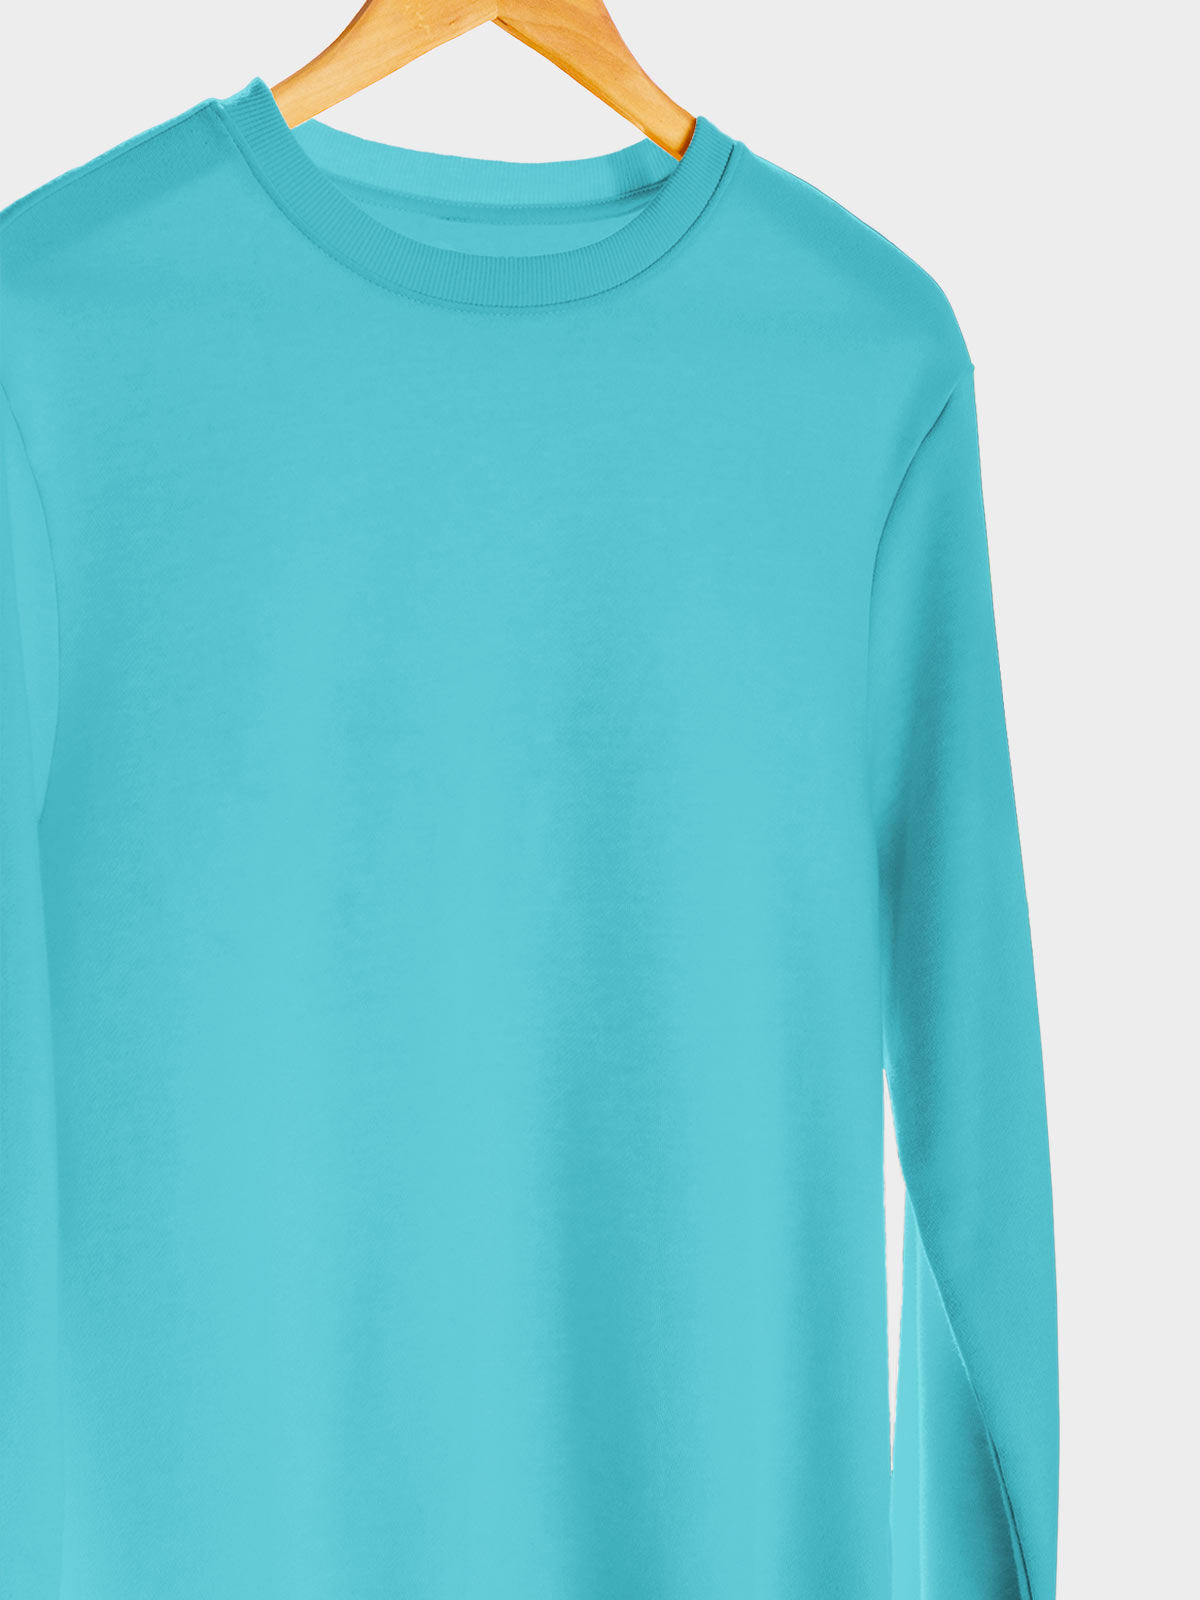 Arctic Blue & Dark Grey Unisex Plain Sweatshirt Combo